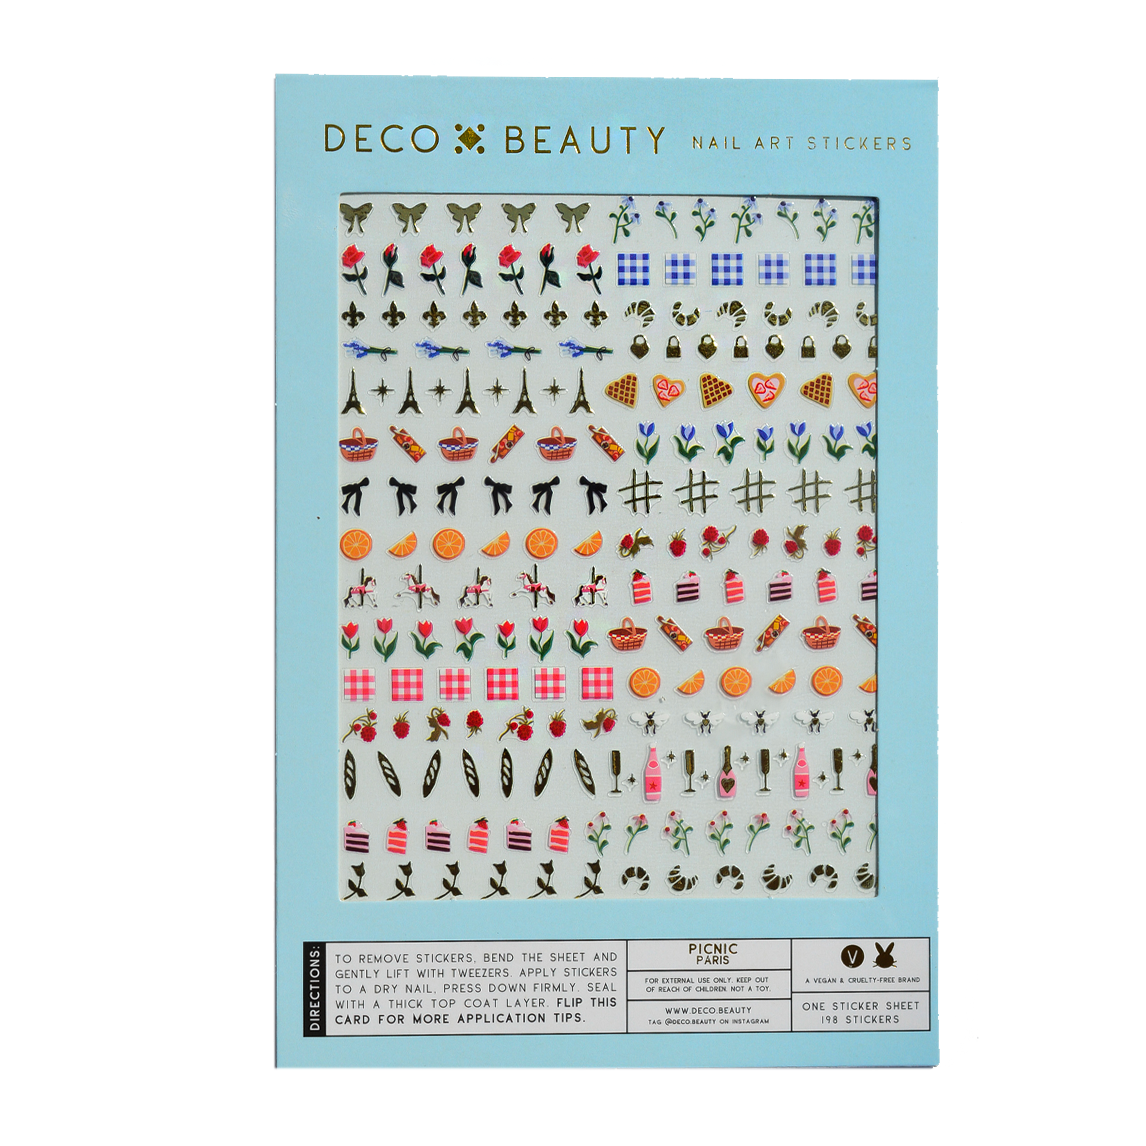 Picnic Paris Nail Art Sticker Sheet